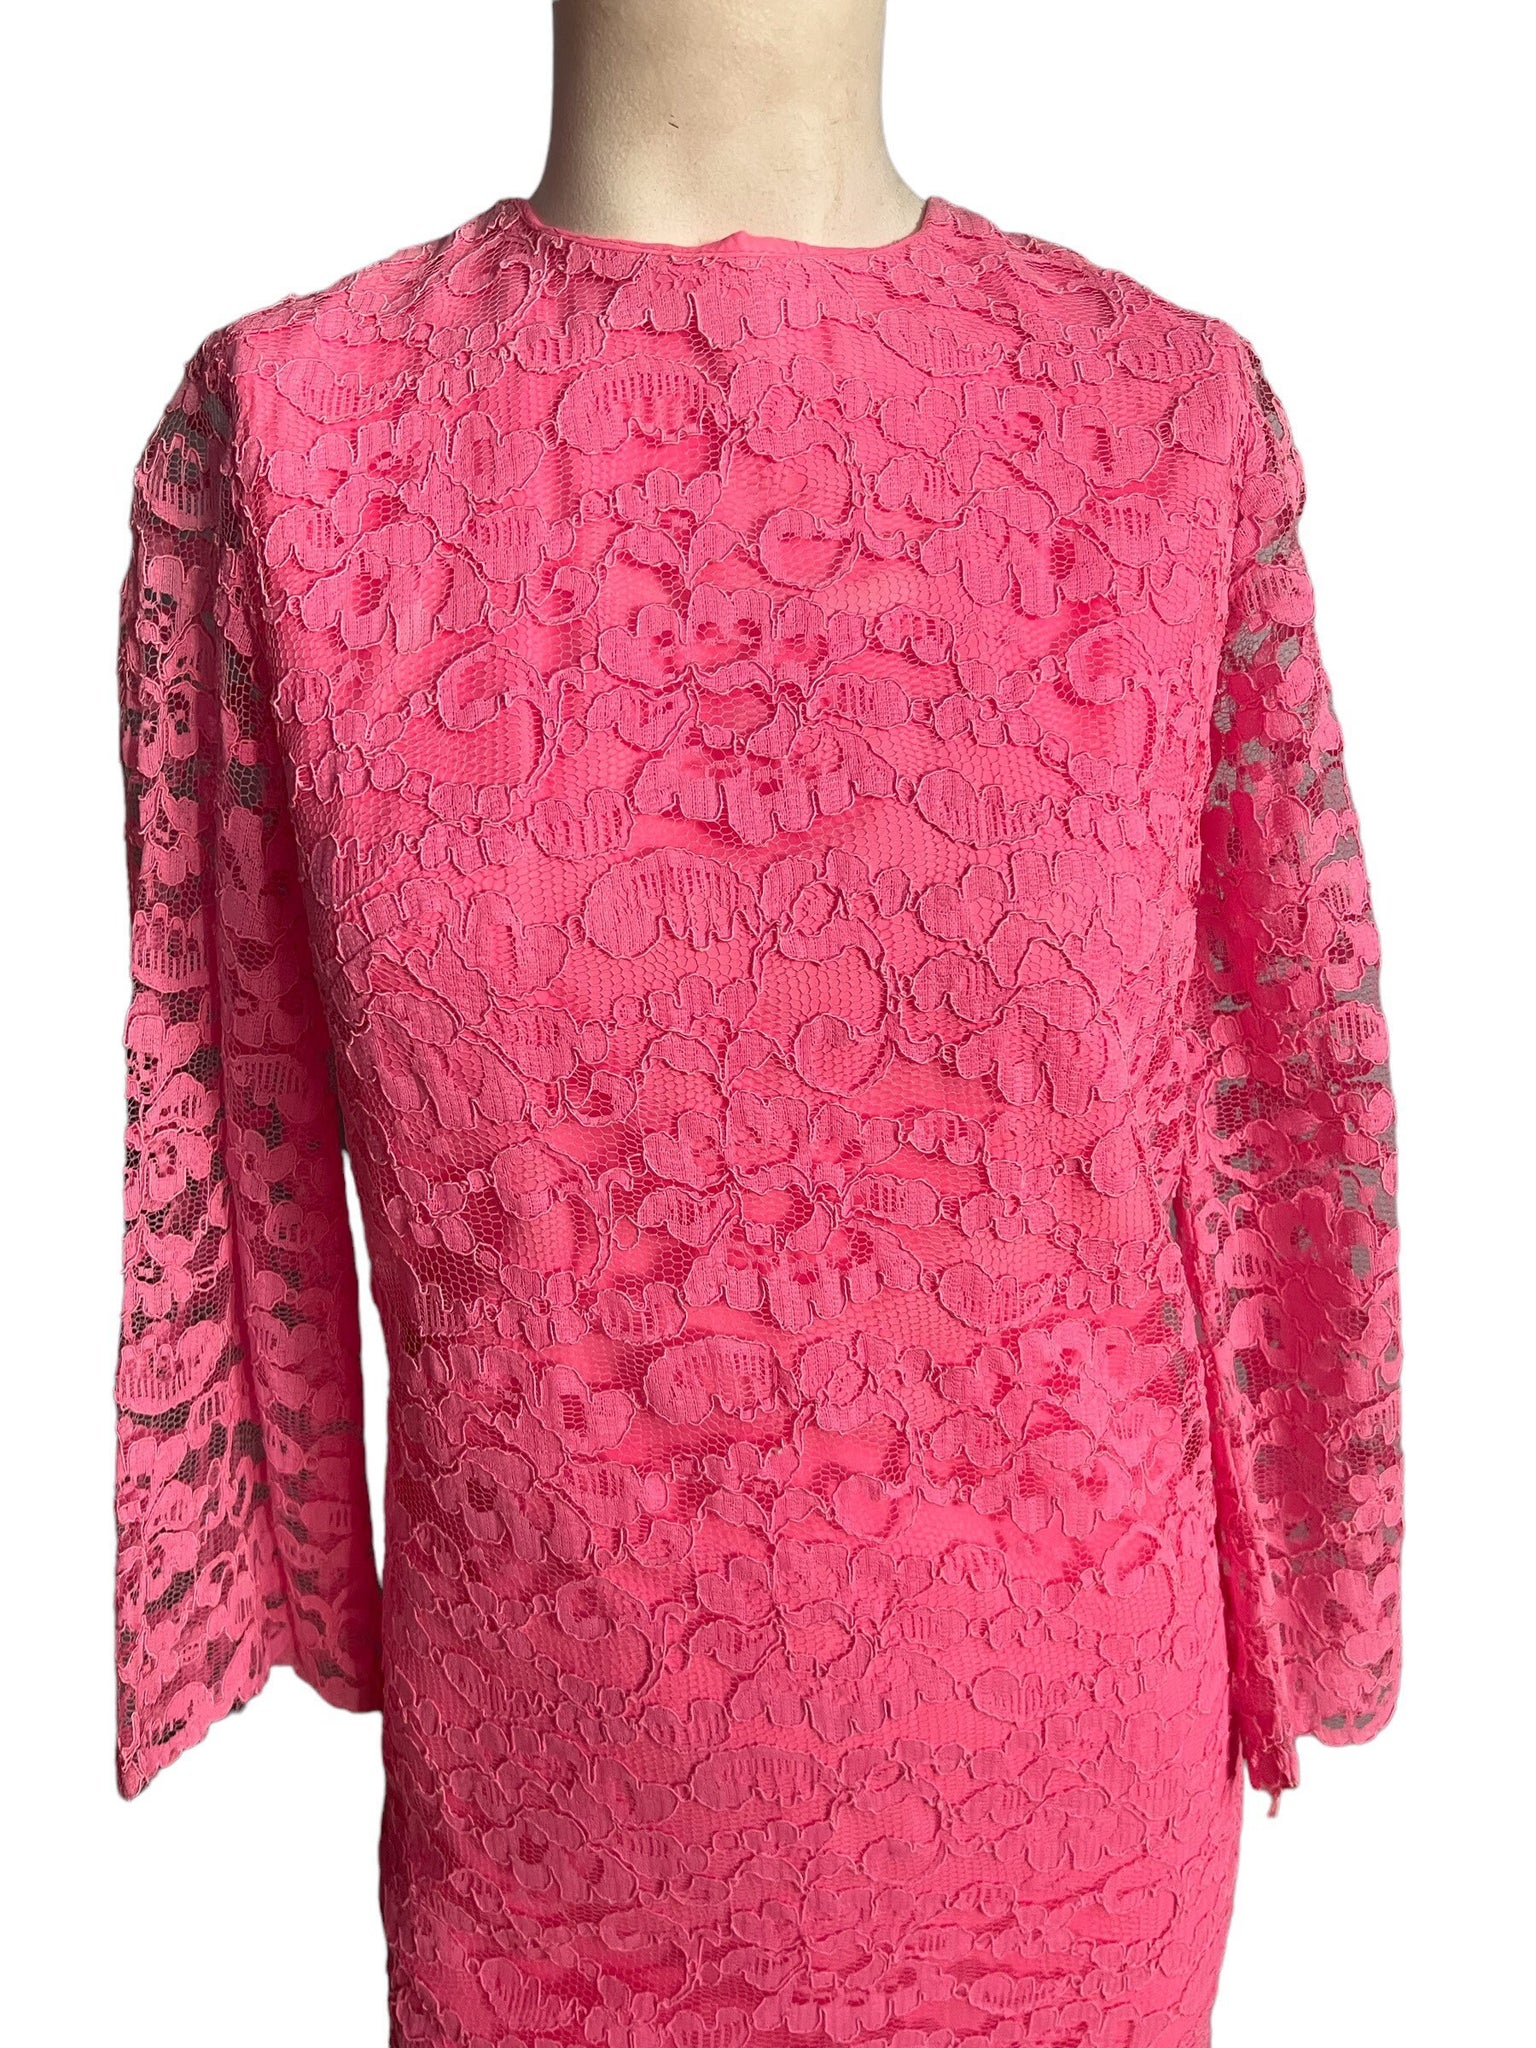 Vintage pink lace 60's dress S handmade